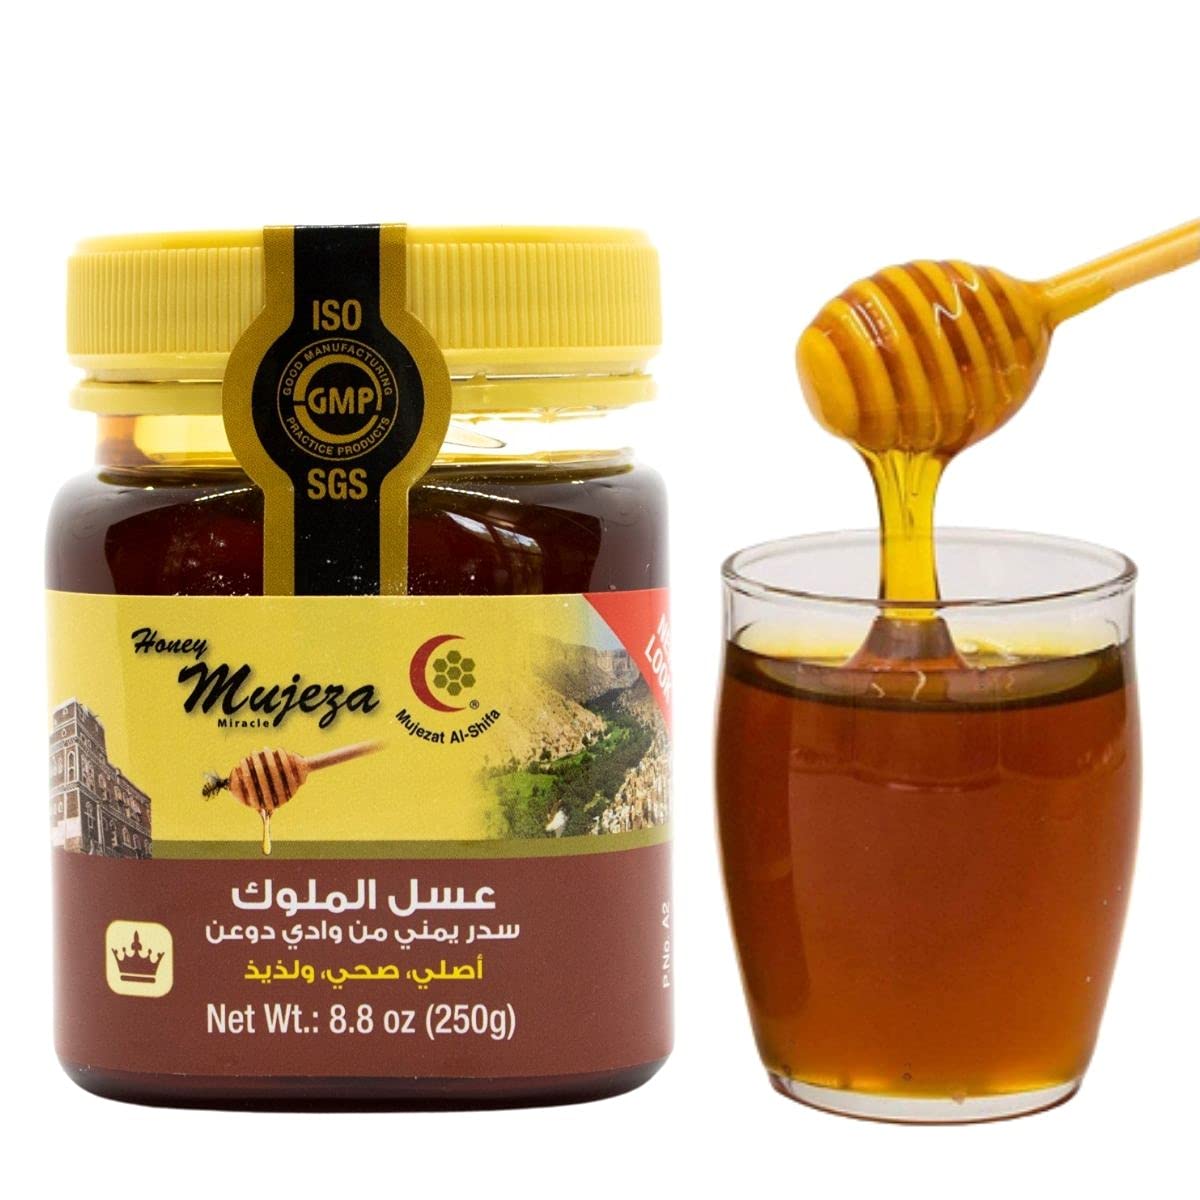 Pack of 3 Raw Royal Honey (Authentic Yemen Douani Sidr Honey)عسل سدر يمني أصلي دوعني Gluten Free Non GMO 100% Natural Raw Honey - (3 Jars 500g / 17.6oz) عسل المعجزه - Mujezat Al-Shifa